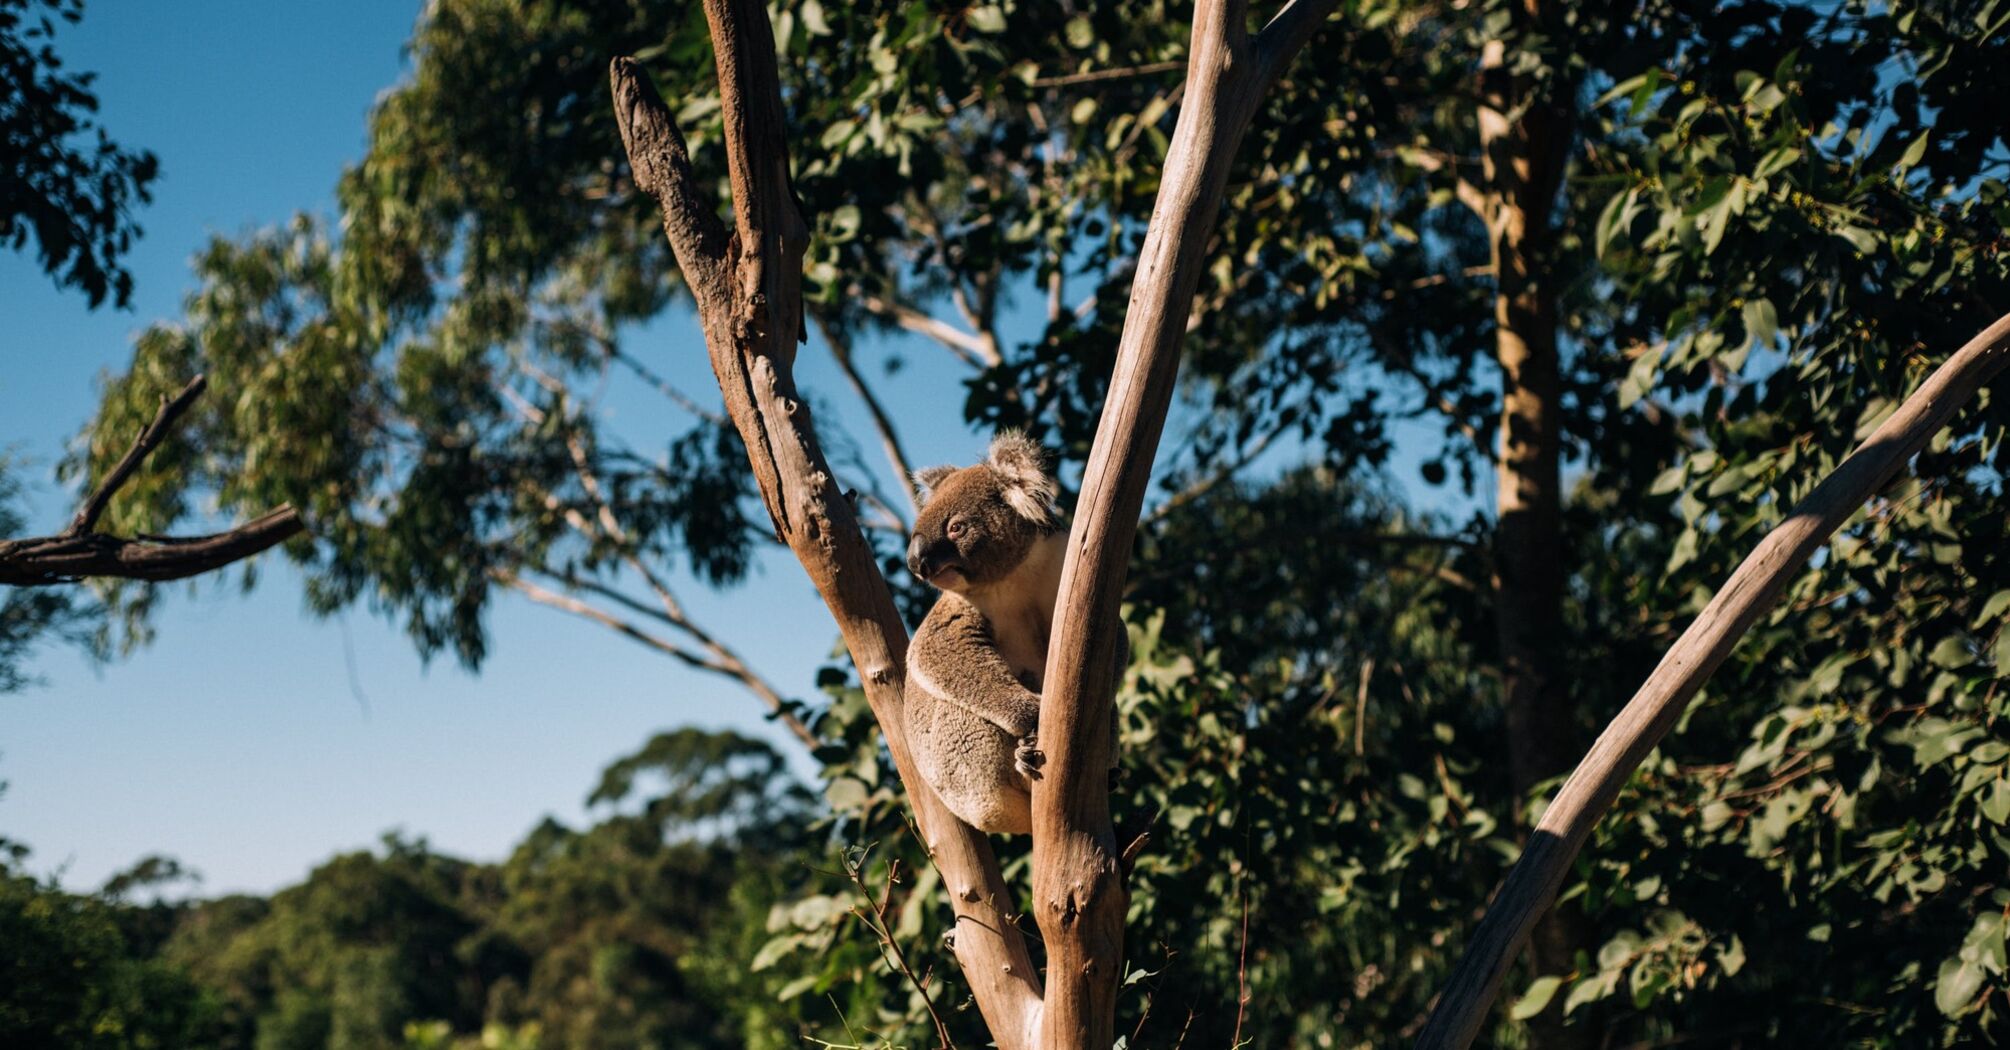 5 interesting facts about koalas